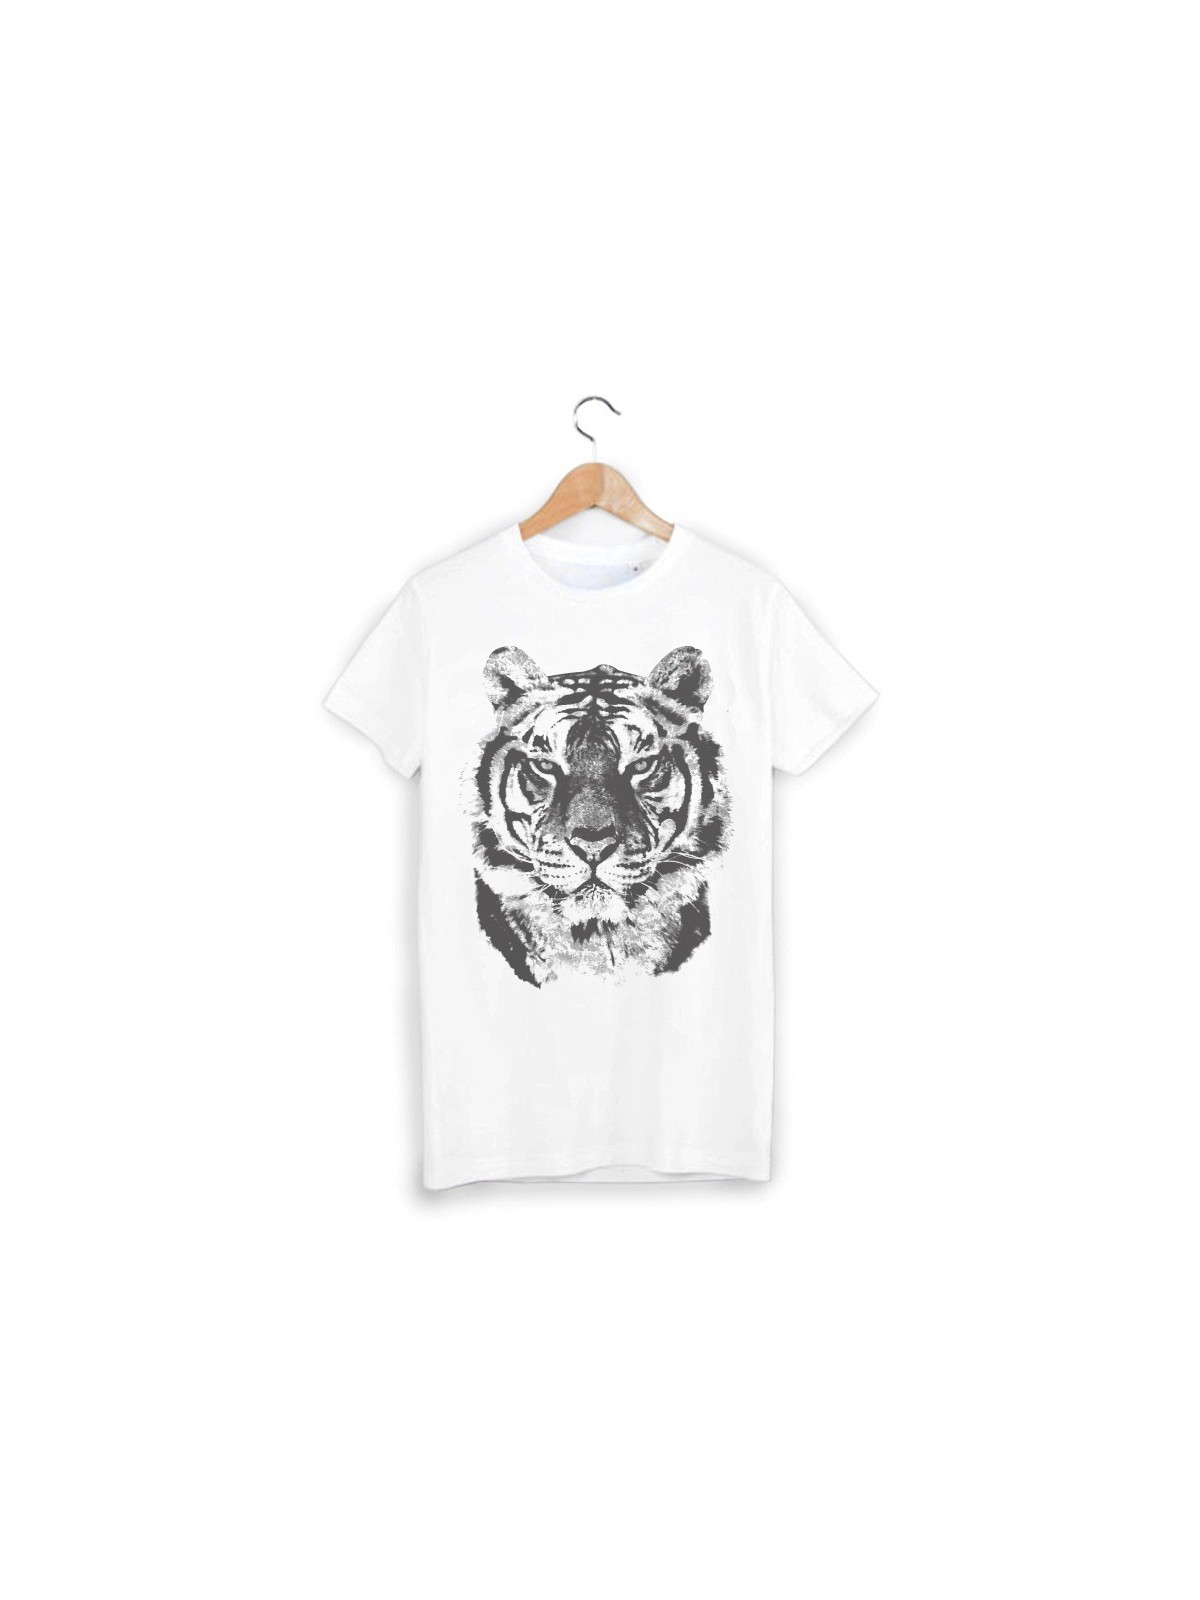 T-Shirt tigre ref 1110